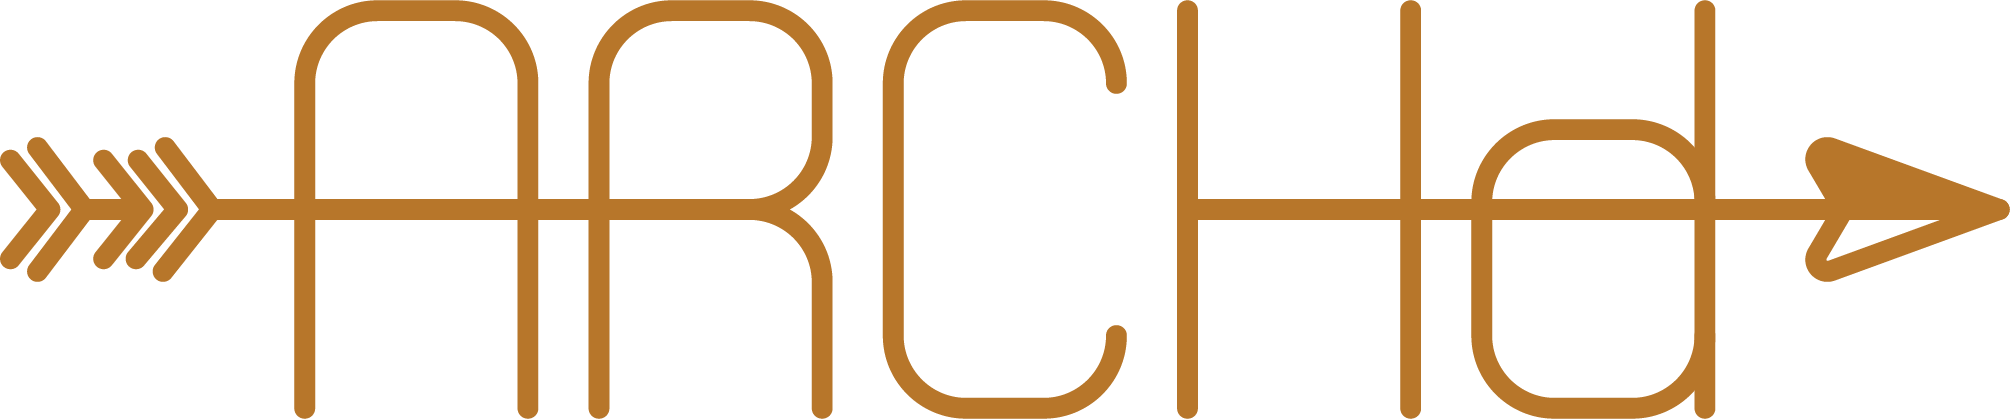 ARCHd logo 2017 color - Lindsey Archer.png